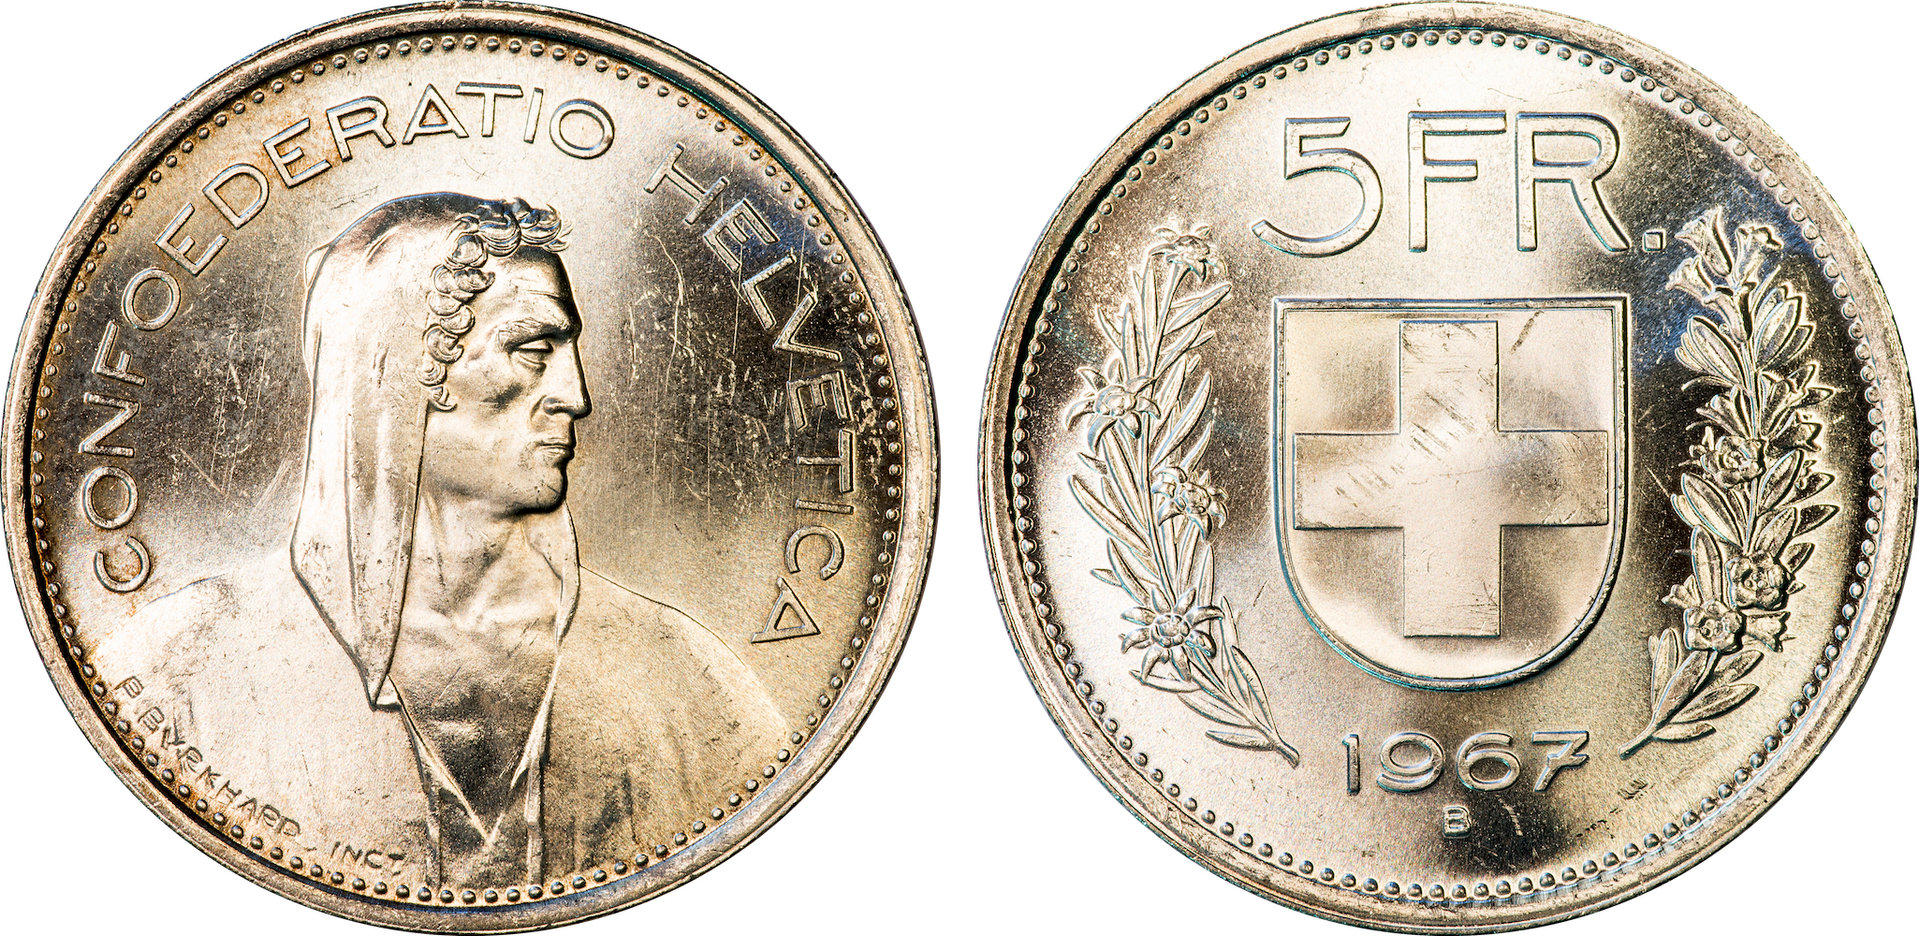 Switzerland - 1967 5 Francs.jpg